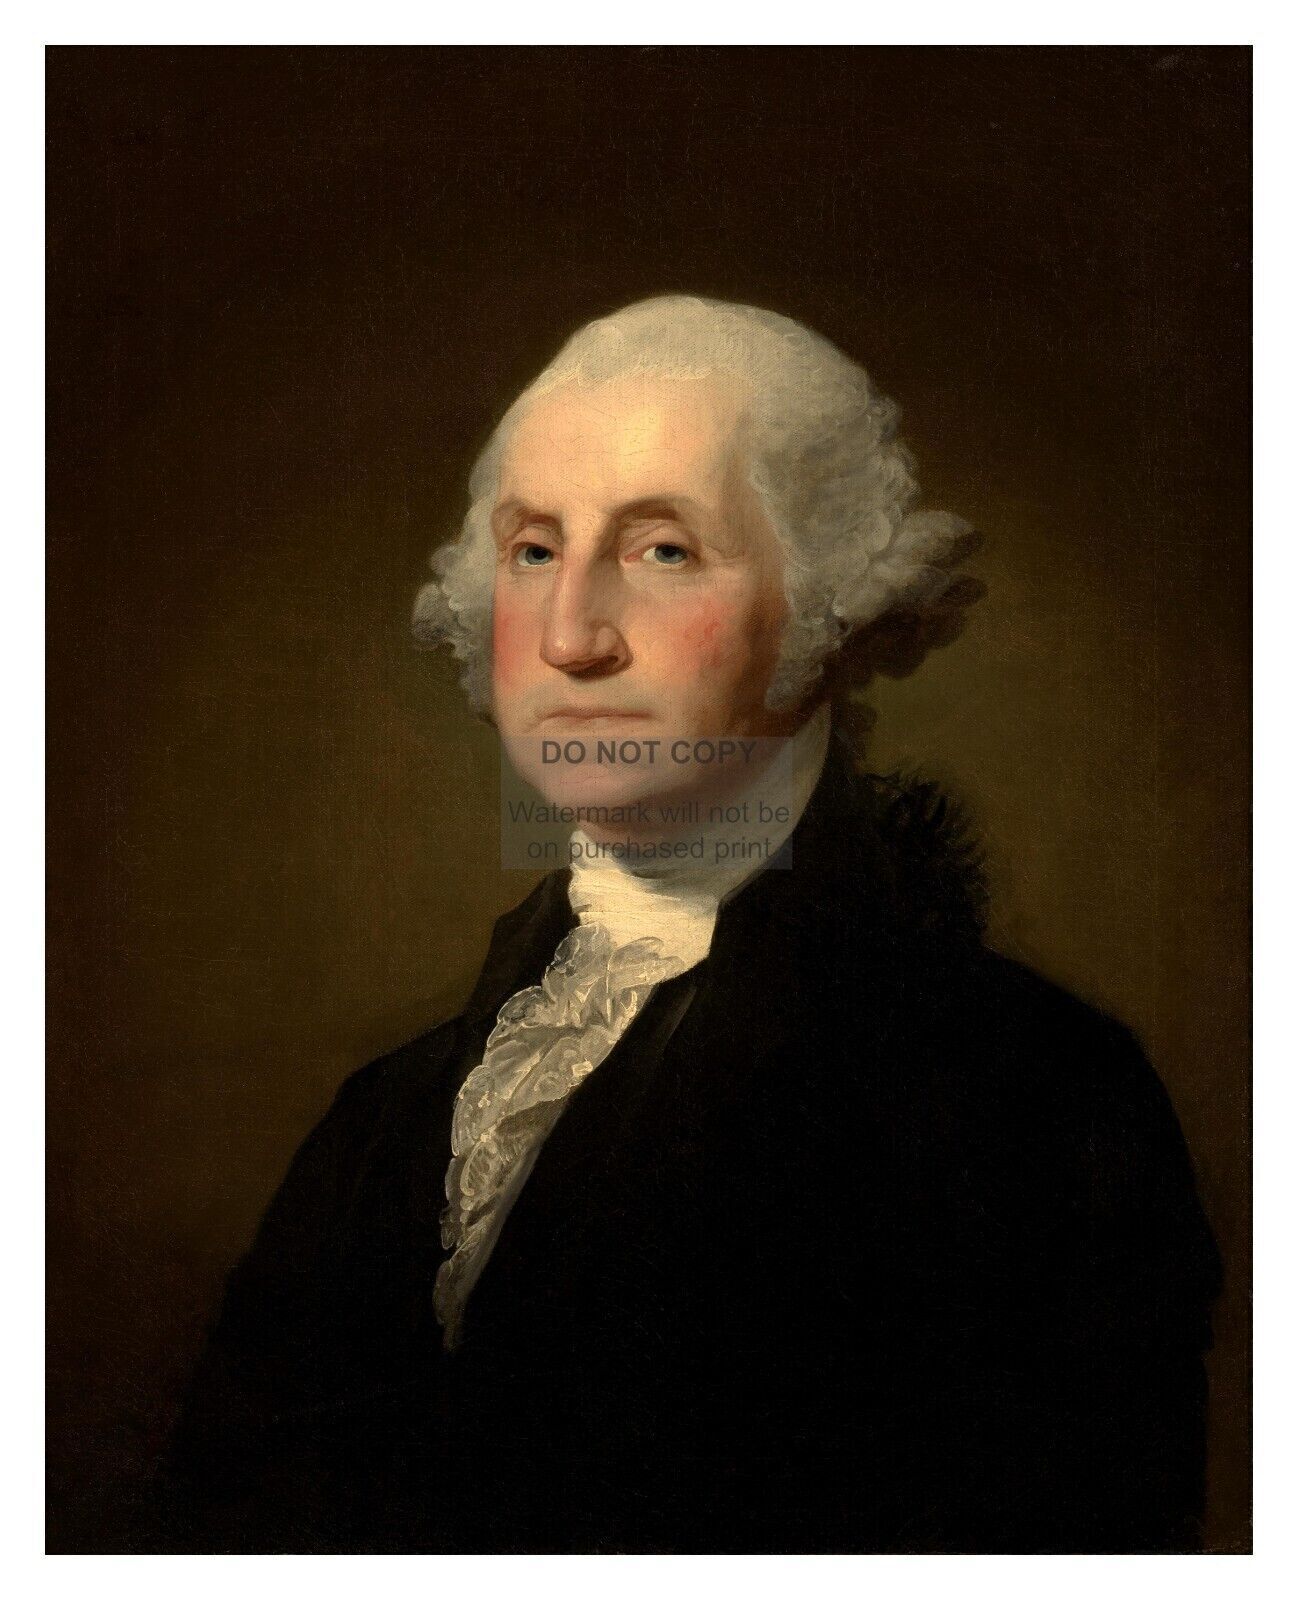 GEORGE WASHINGTON 1ST PRESIDENT OF THE UNITED STATES PORTRAIT 8X10 PHOTO REPRINT